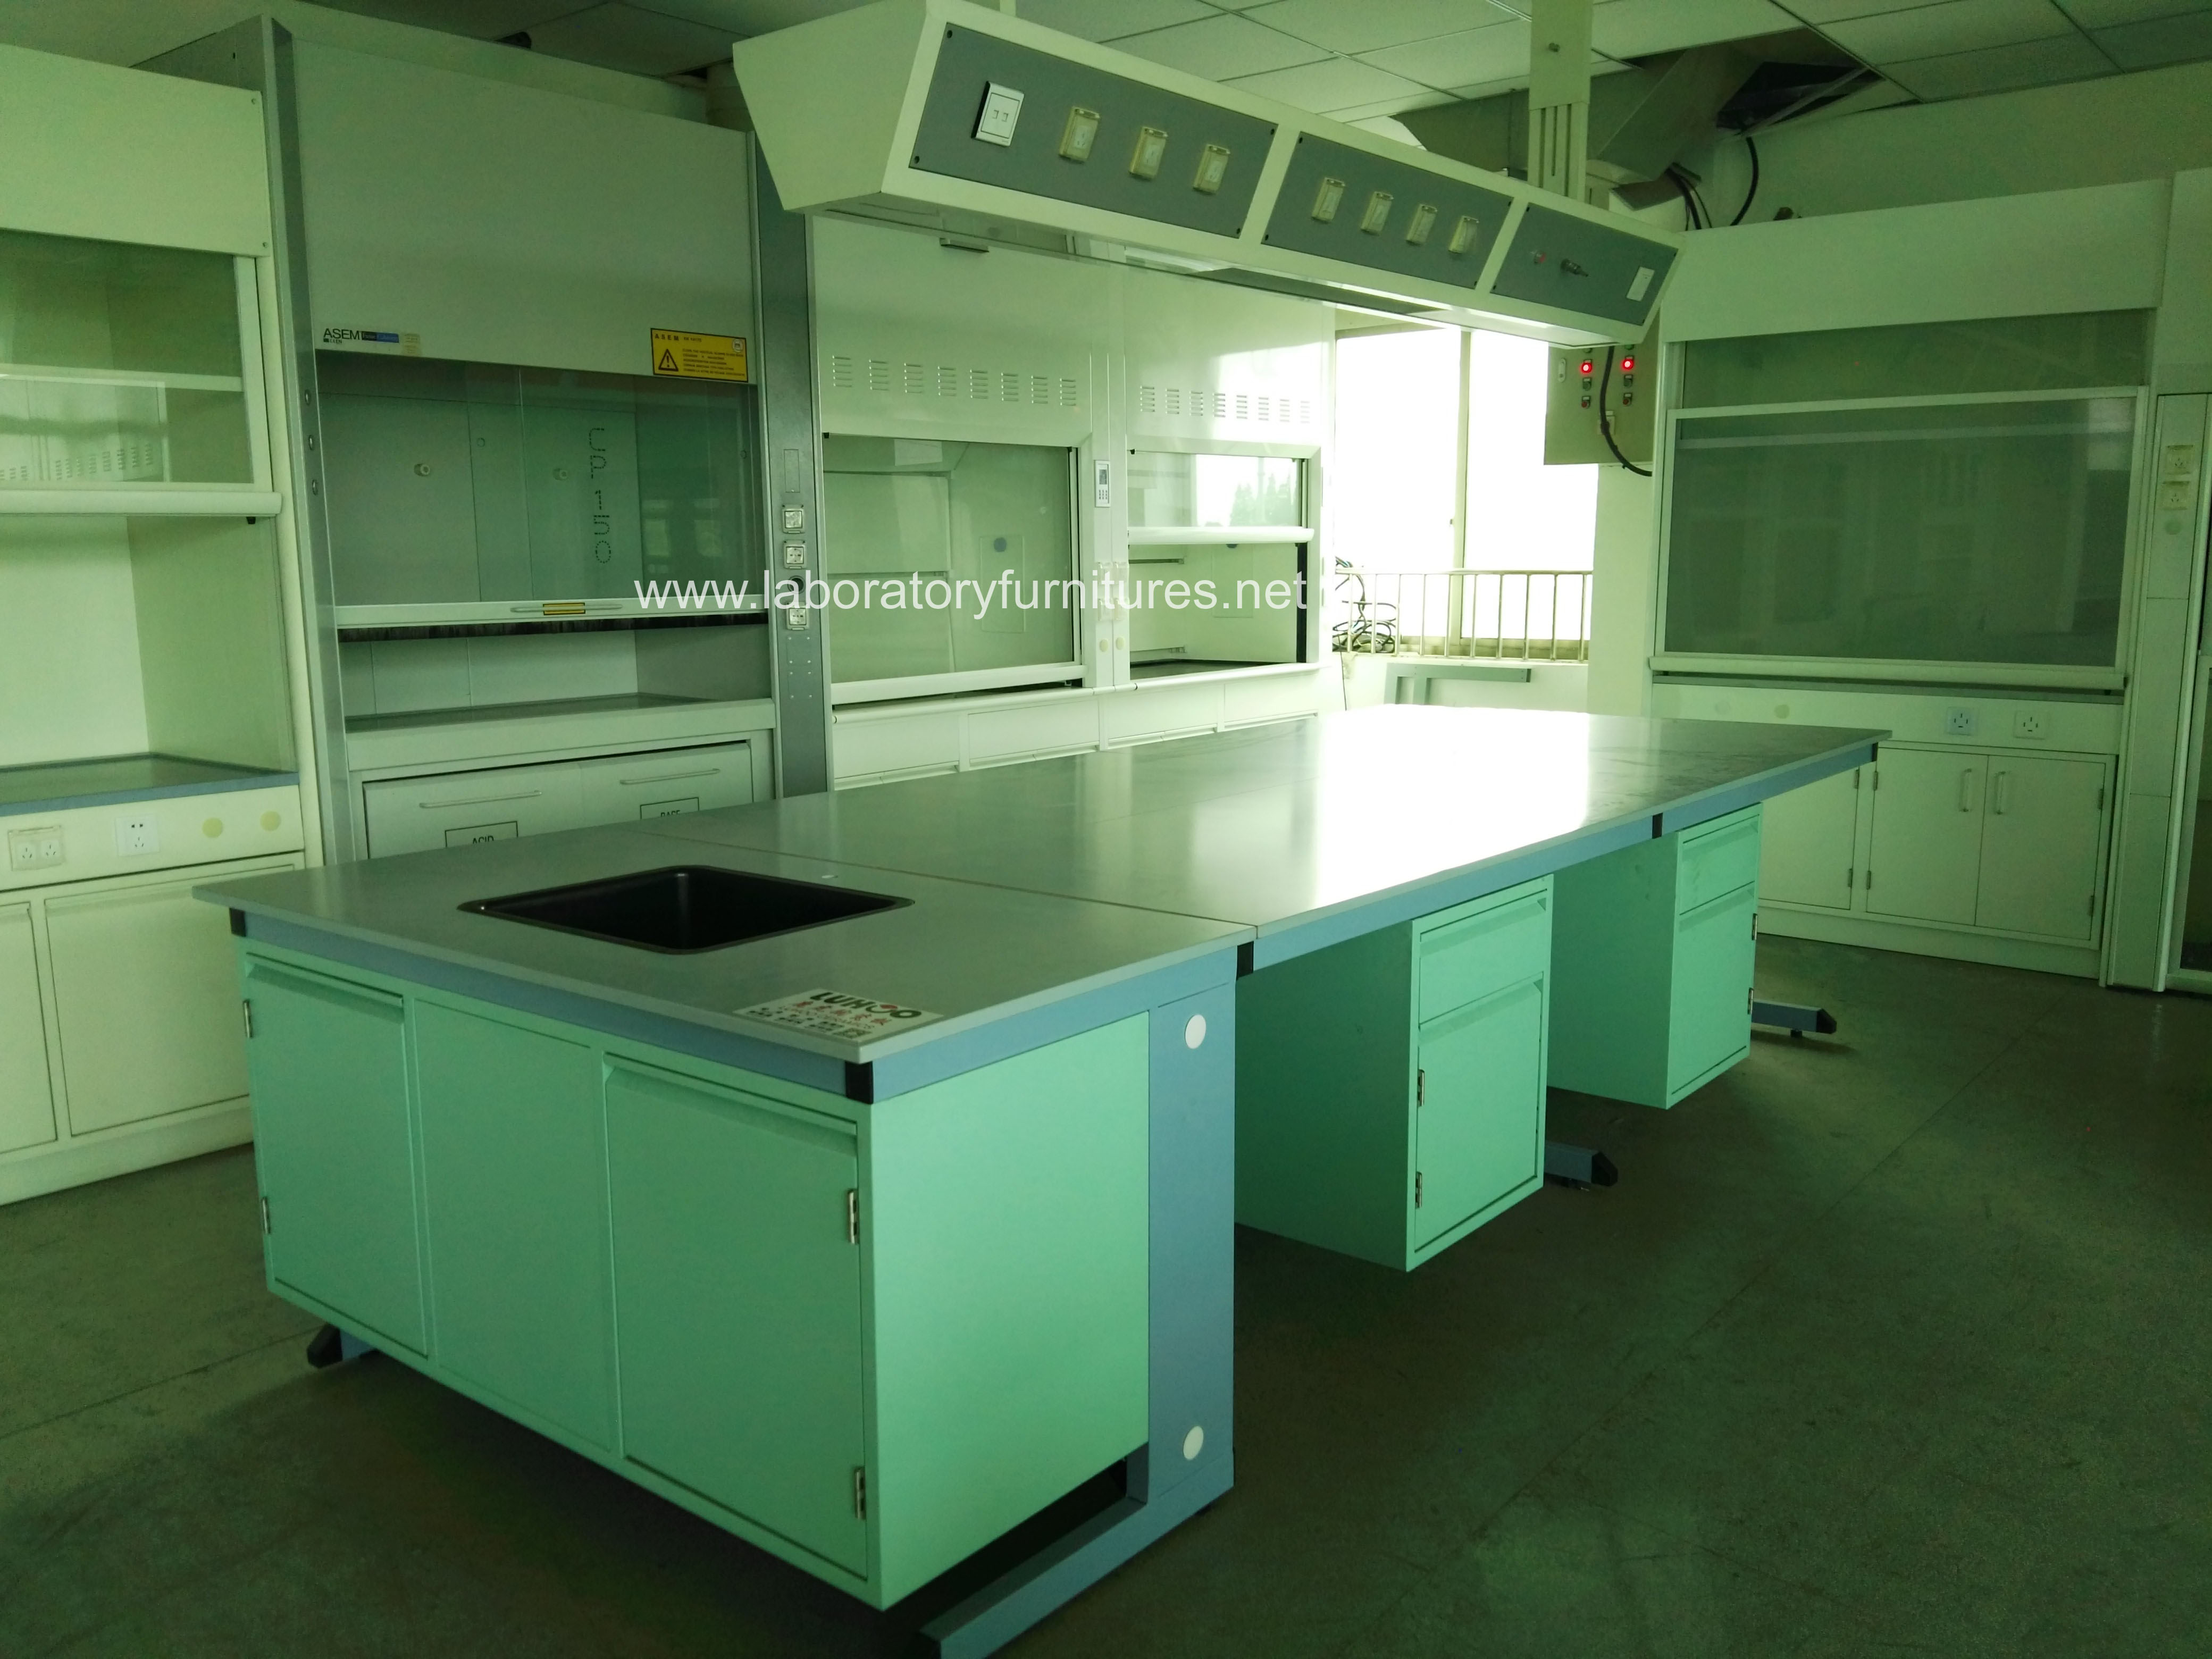 2021 new laboratory furniture